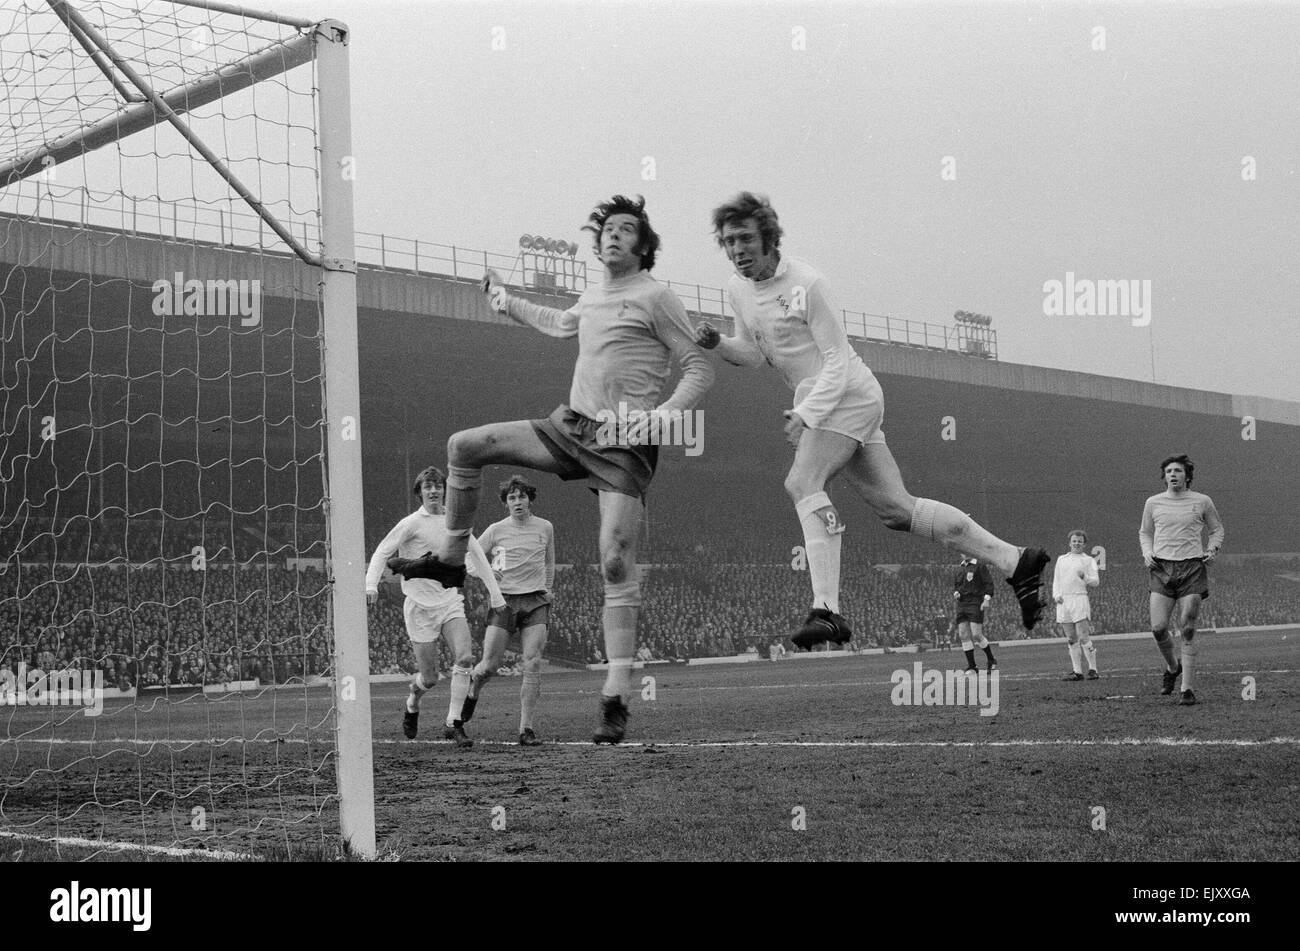 FA Cup Quarter Final match at Elland Road. Leeds United 2 v Tottenham Hotspur 1. Leeds' Mick Jones jumps up for a high ball with a Spurs defender. 18th March 1972.  *** Local Caption *** Allan Clarke Stock Photo